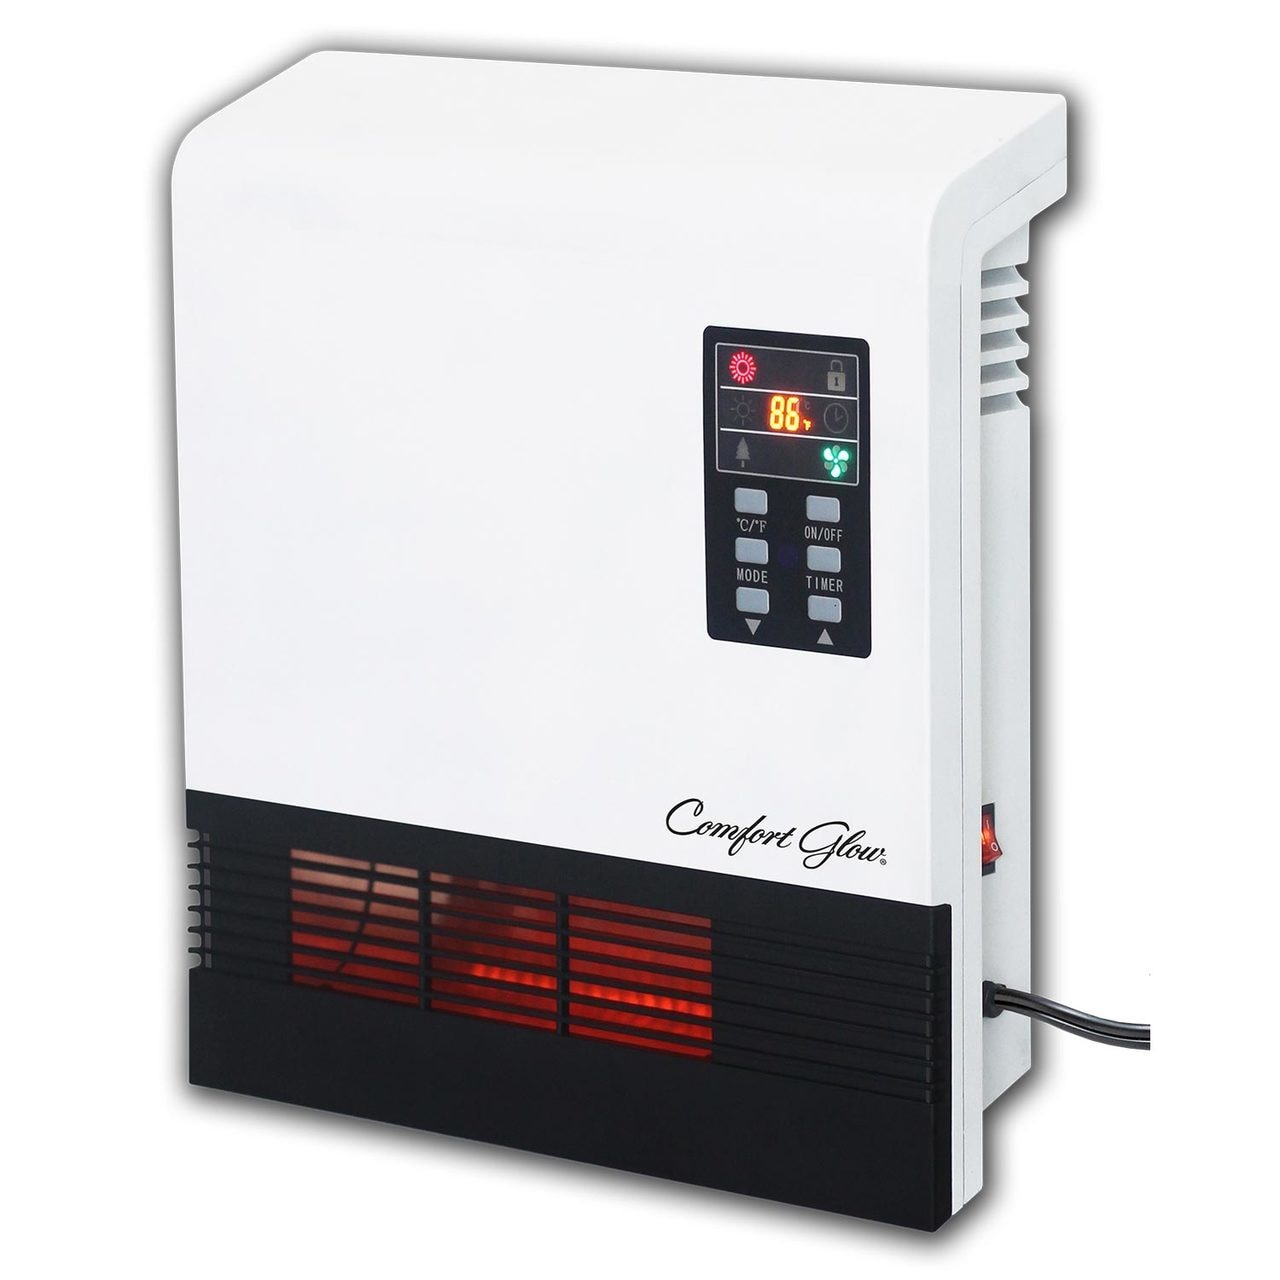 Comfort Glow QWH2100 Comfort Furnace, 15 A, 120 VAC, 1500 W, 5120 Btu, 1000 sq-ft Heating Area, Remote Control - 1